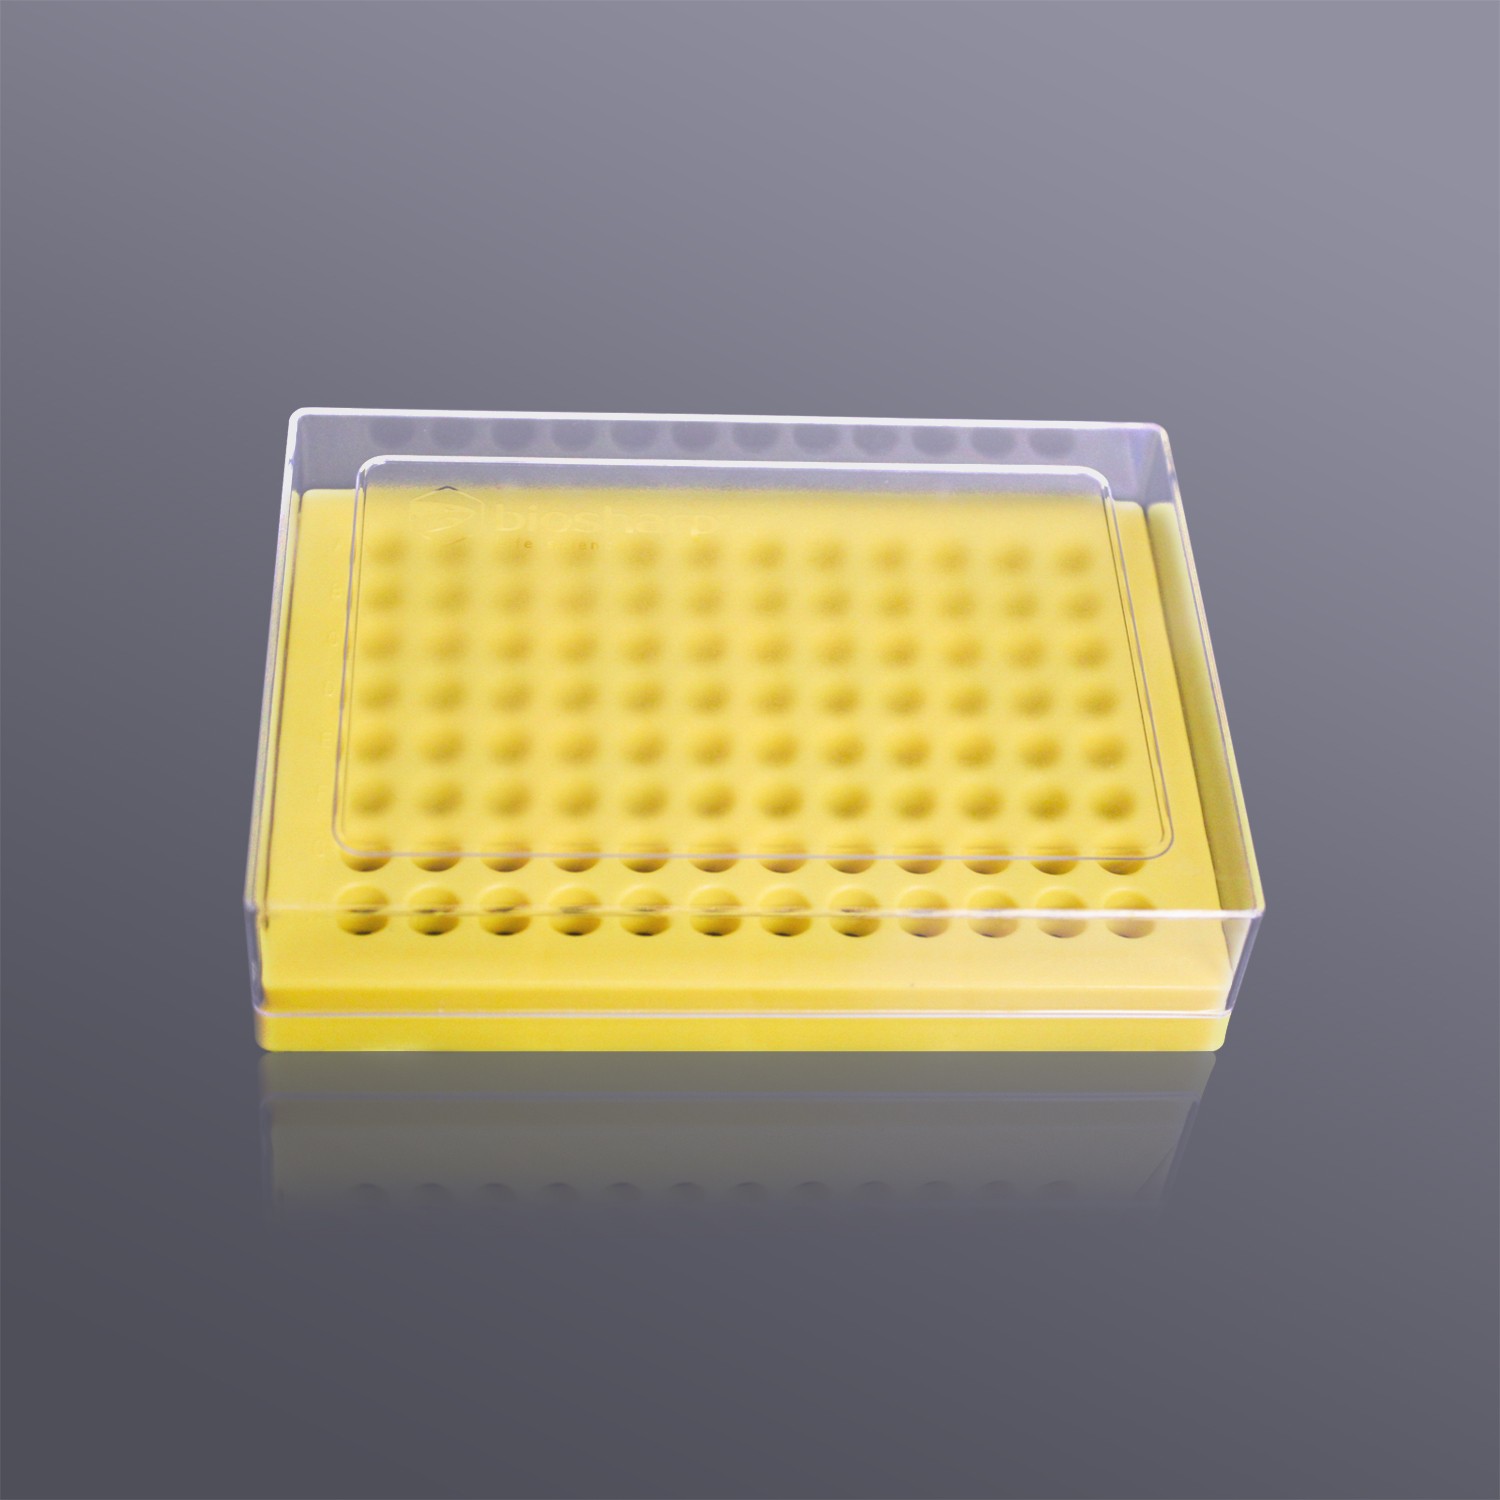 Biosharp BS-02-PB96-PC-Y 0.2ml薄壁管盒(PC),黄色